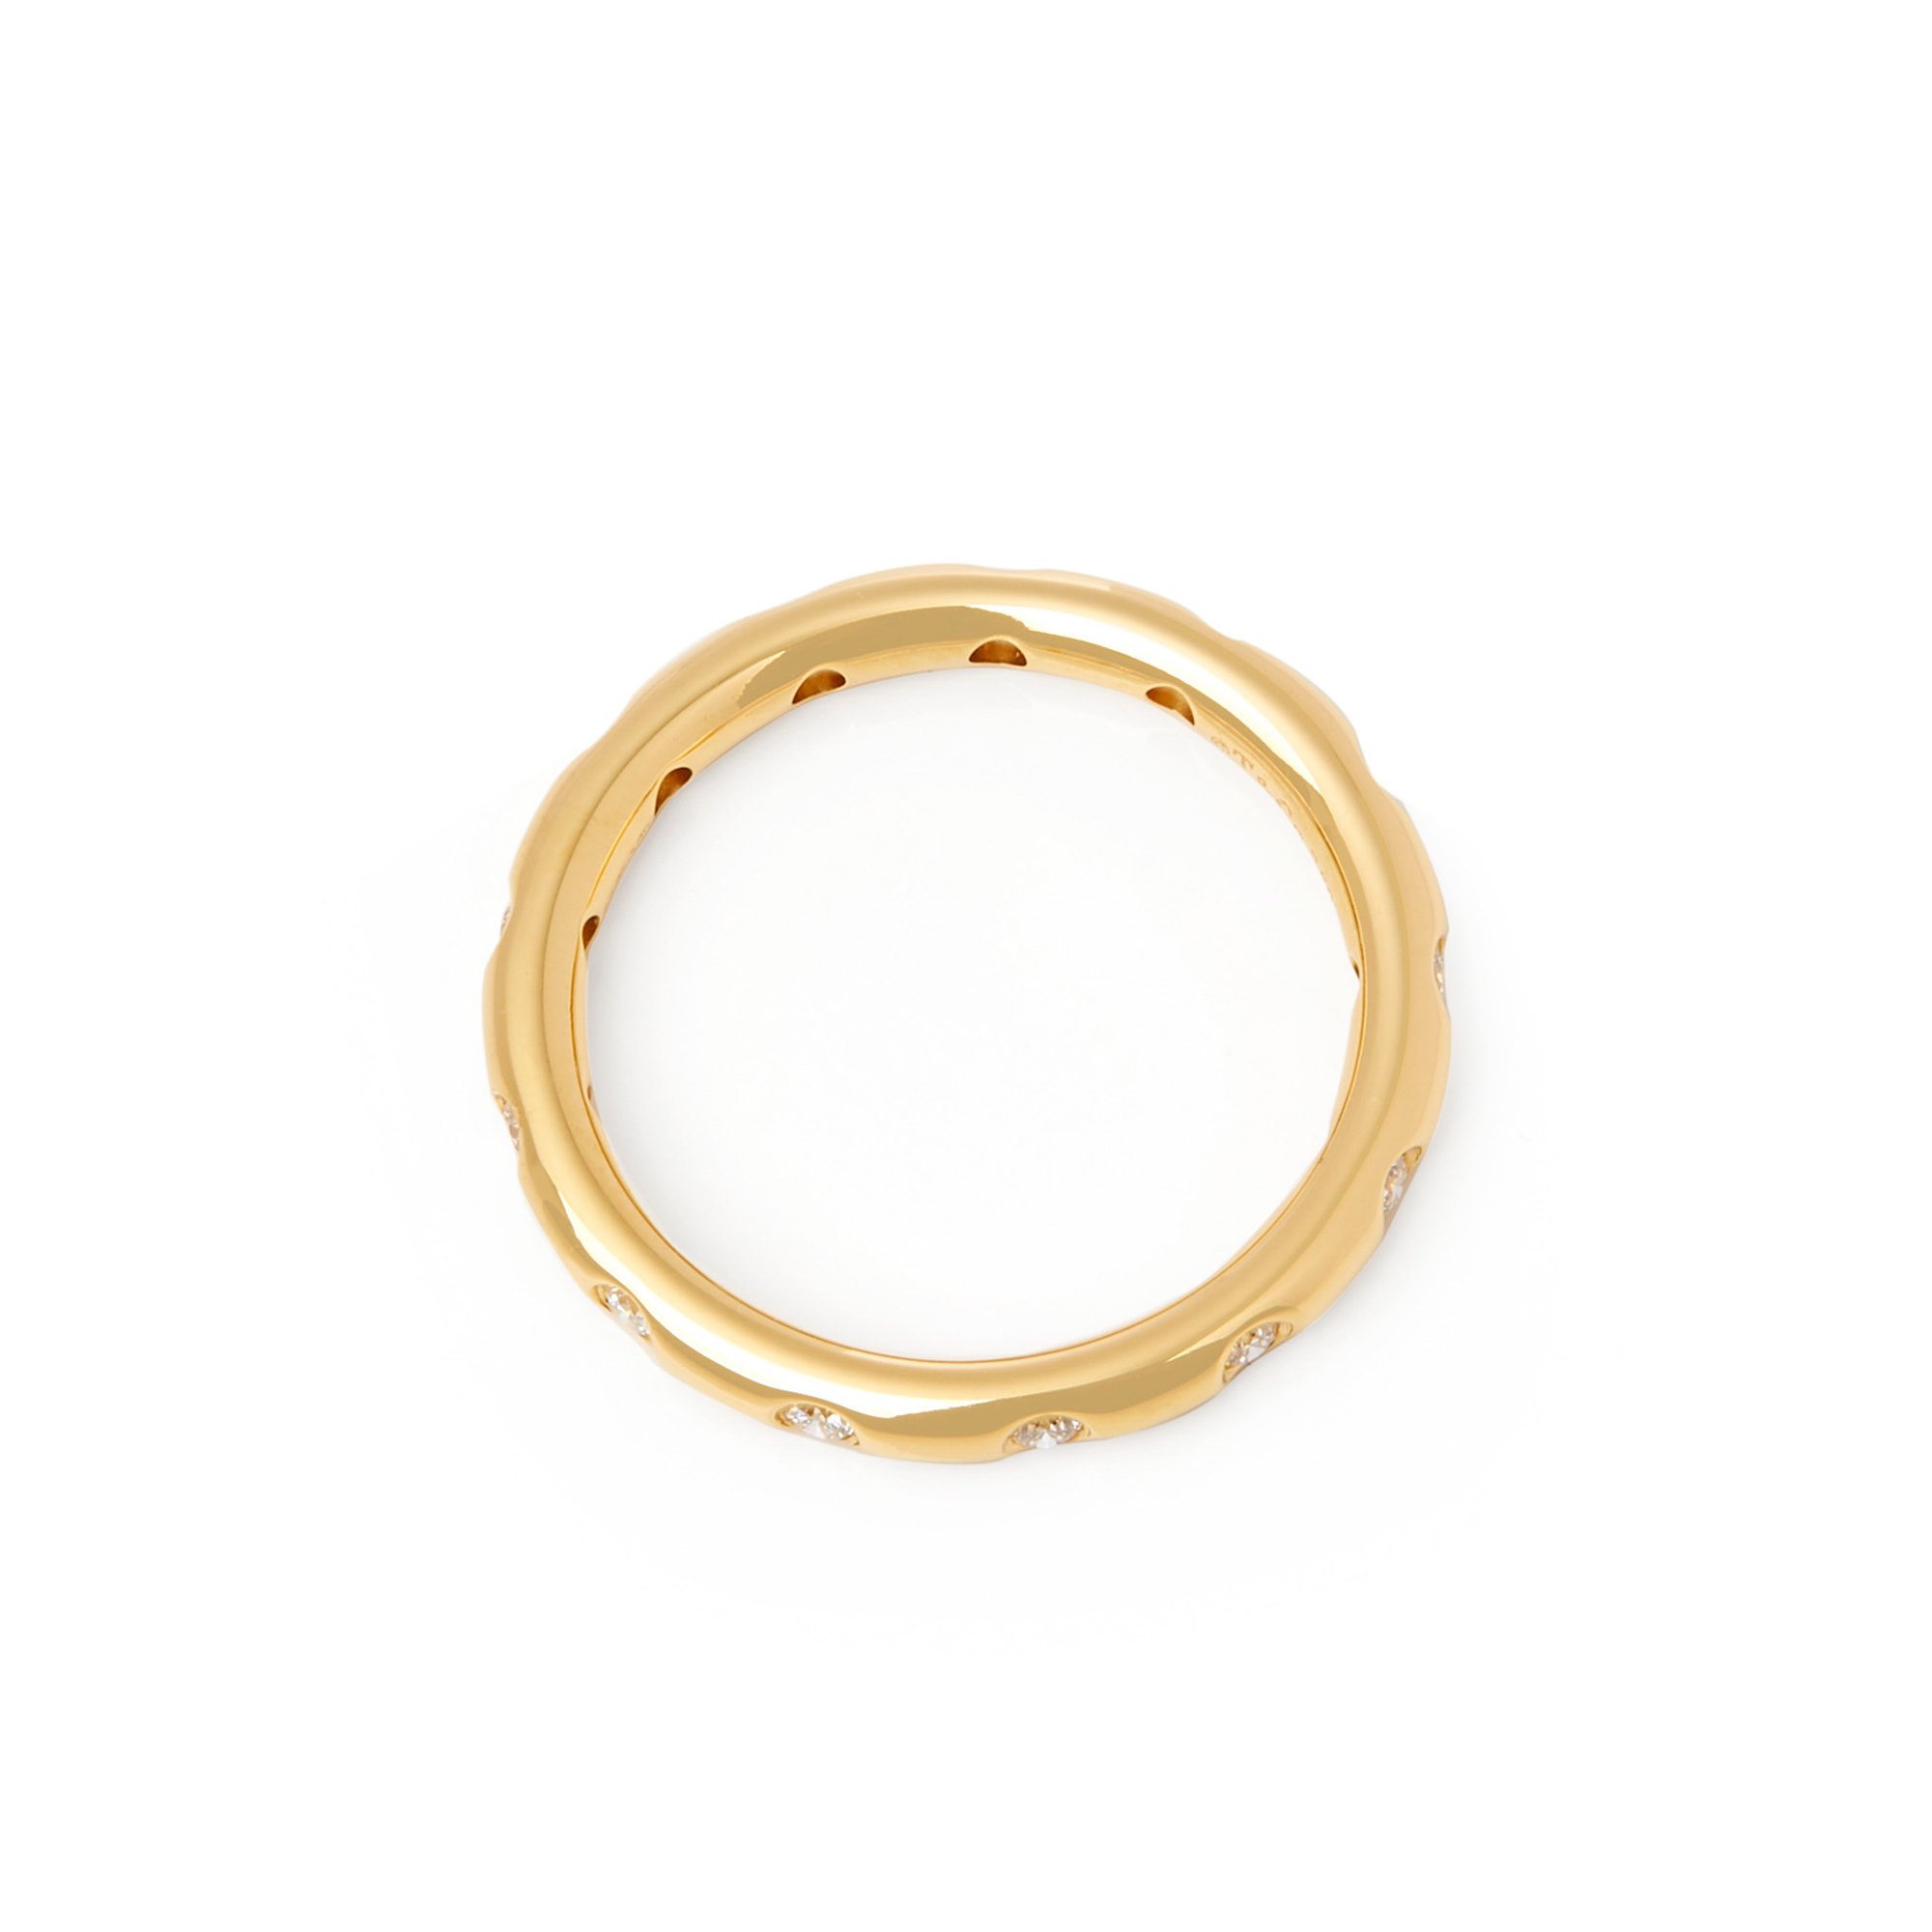 Tiffany & Co. 18k Yellow Gold Round Brilliant Cut Diamond Eternity Ring